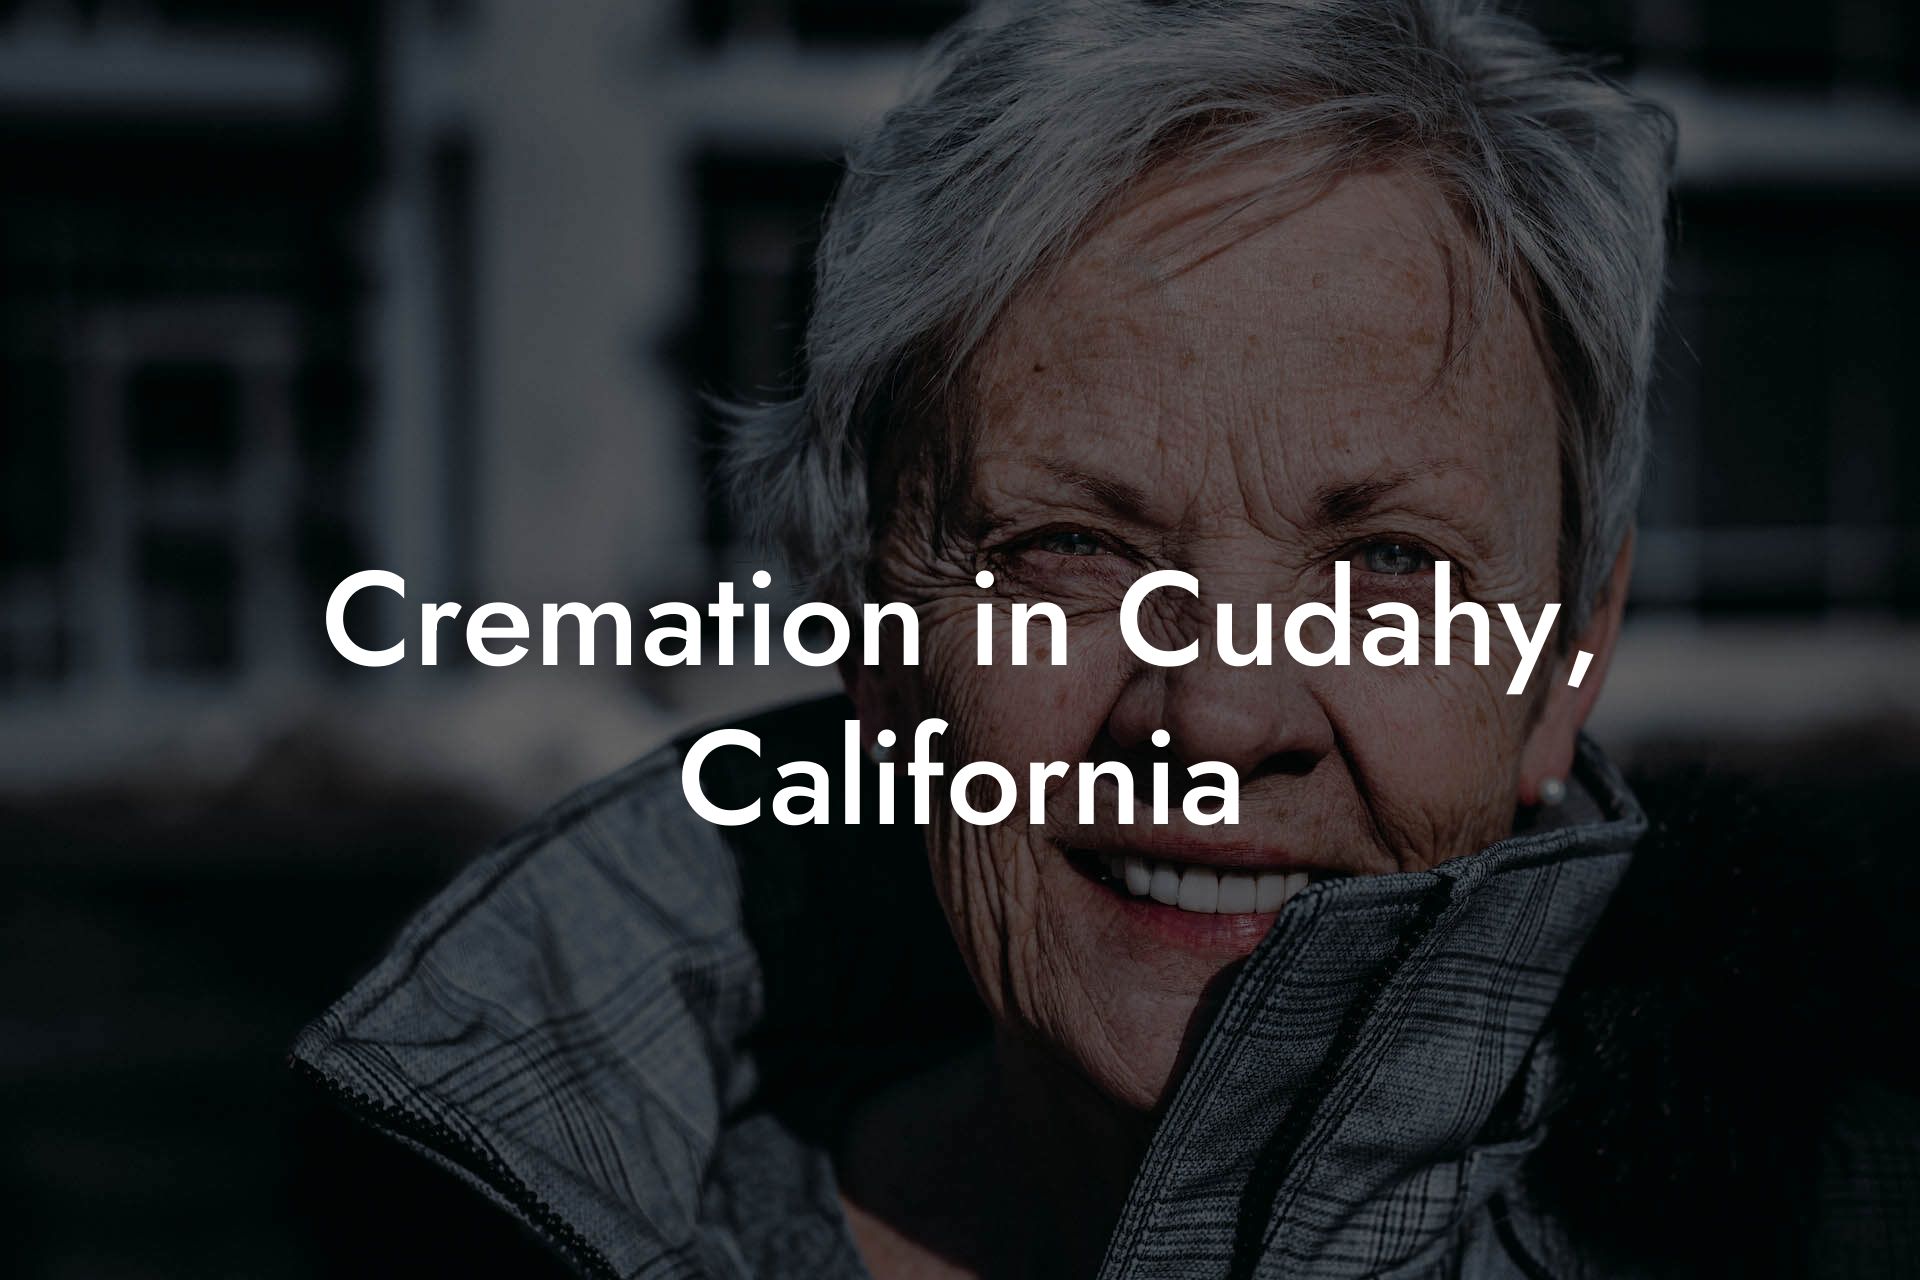 Cremation in Cudahy, California